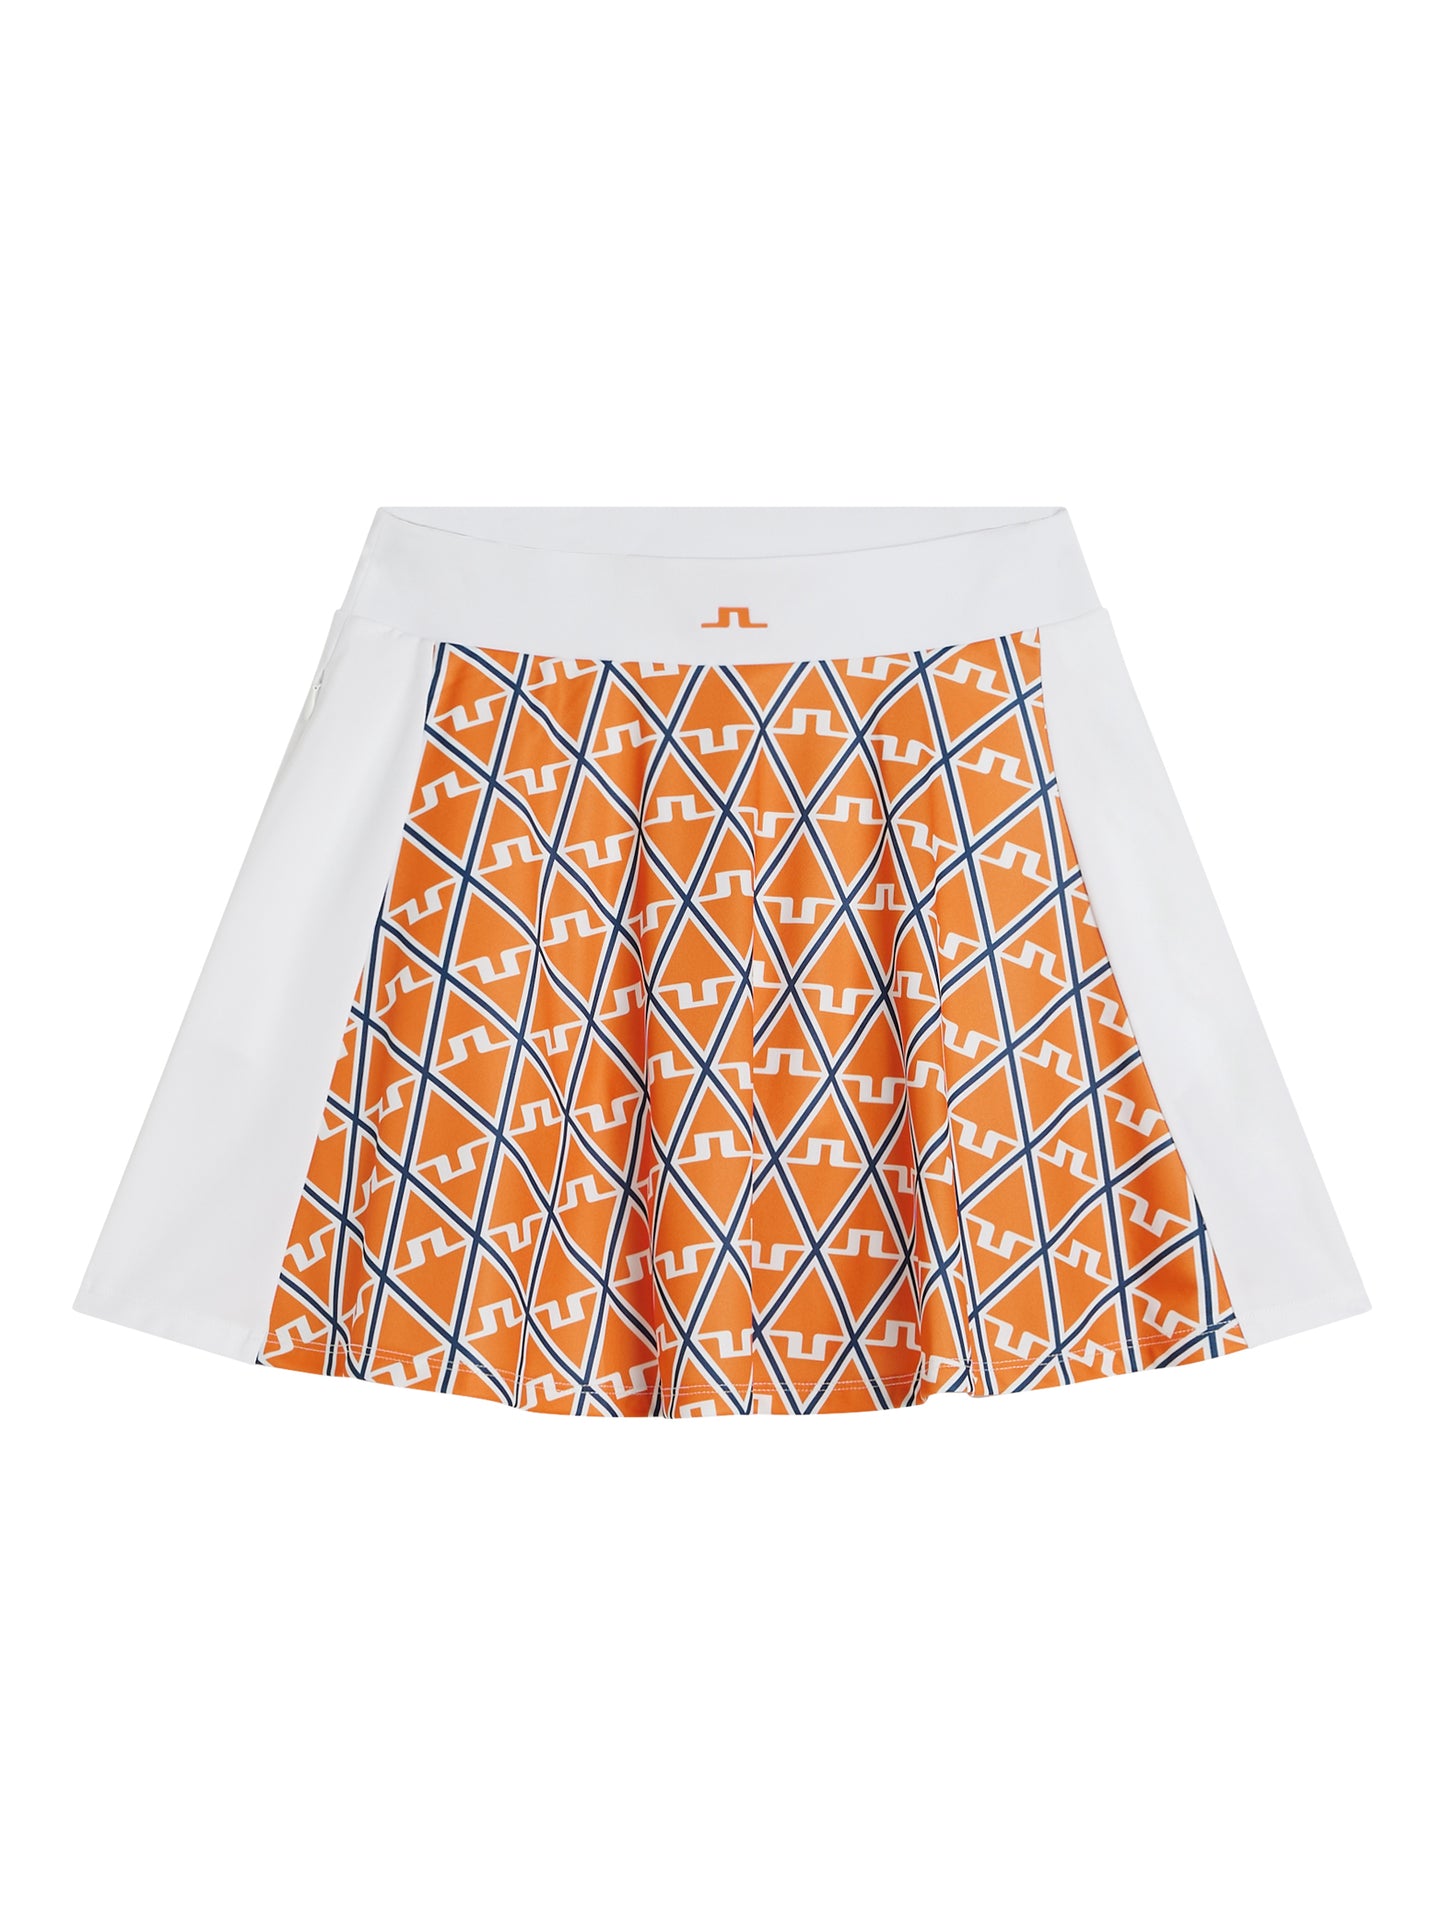 Jenny Print Skirt / Exuberance Diamond